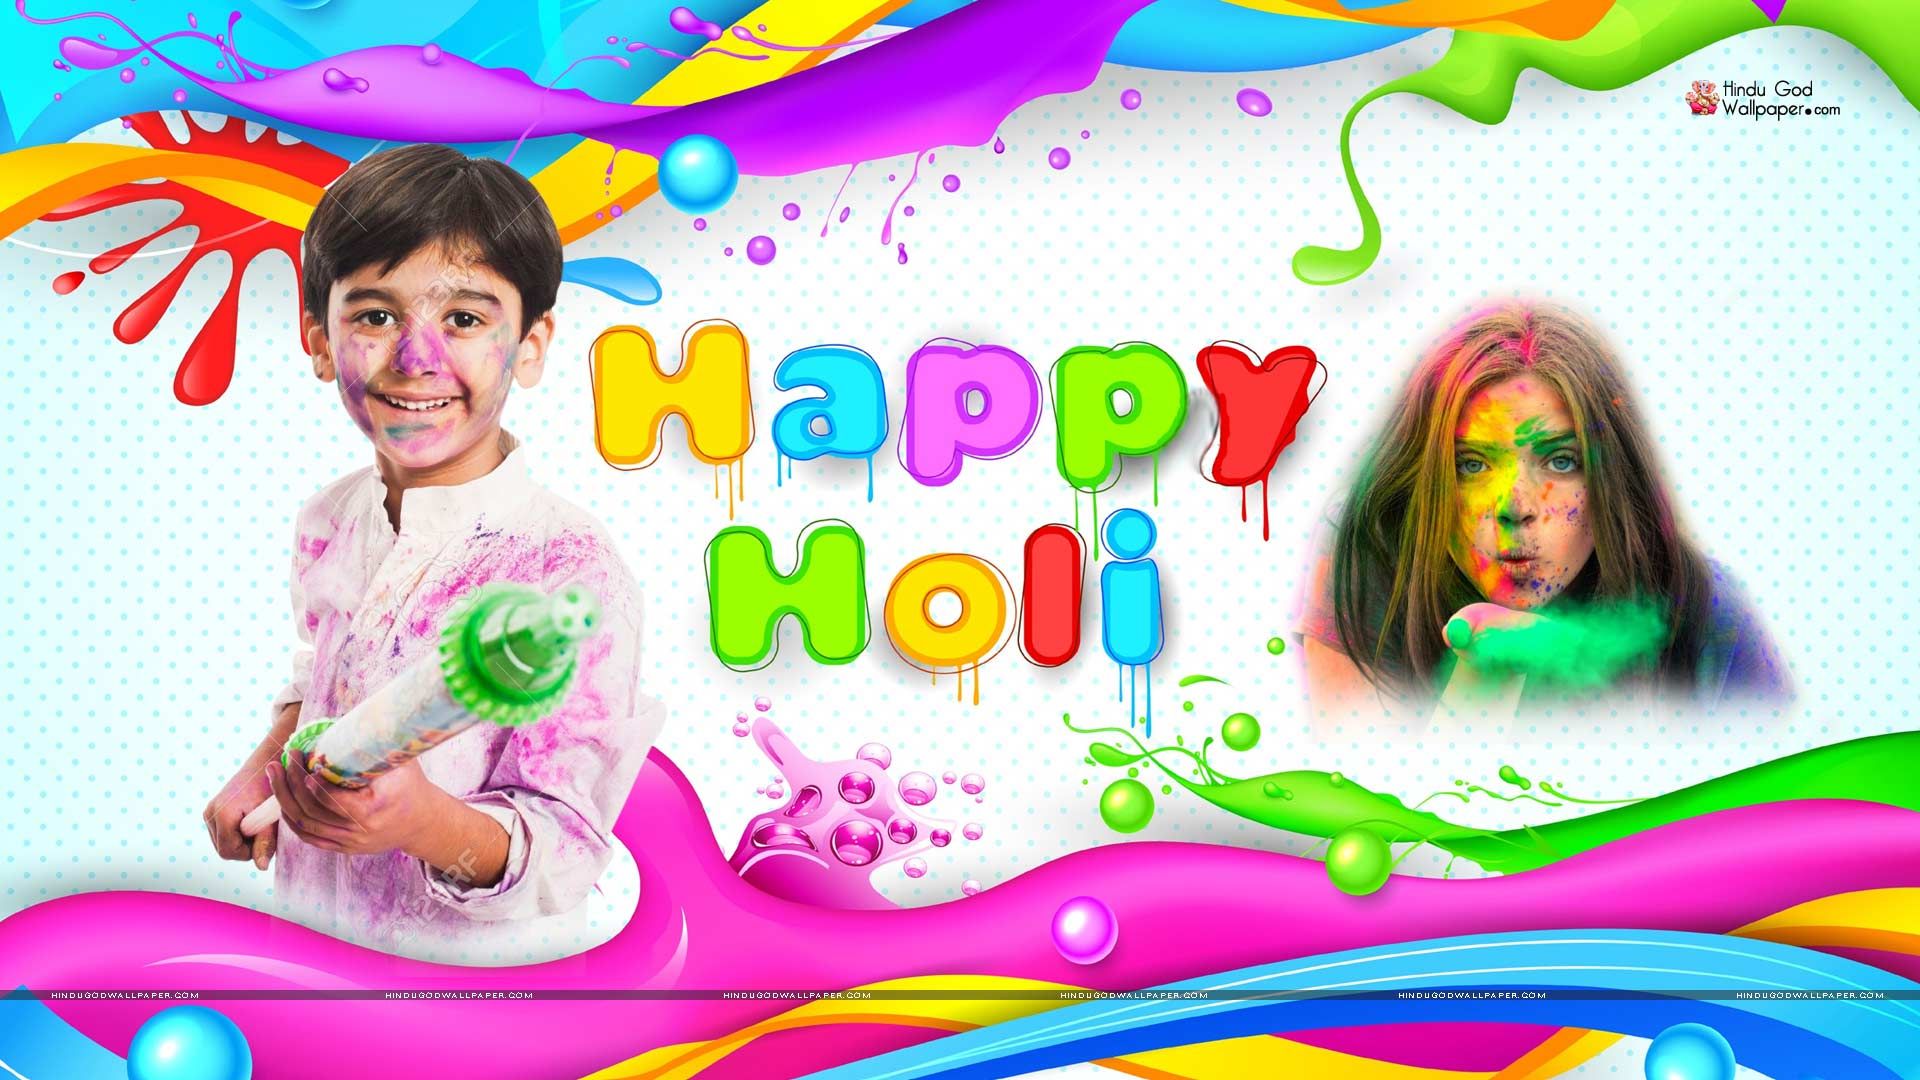 Holi Wallpaper Download For Mobile - HD Wallpaper 